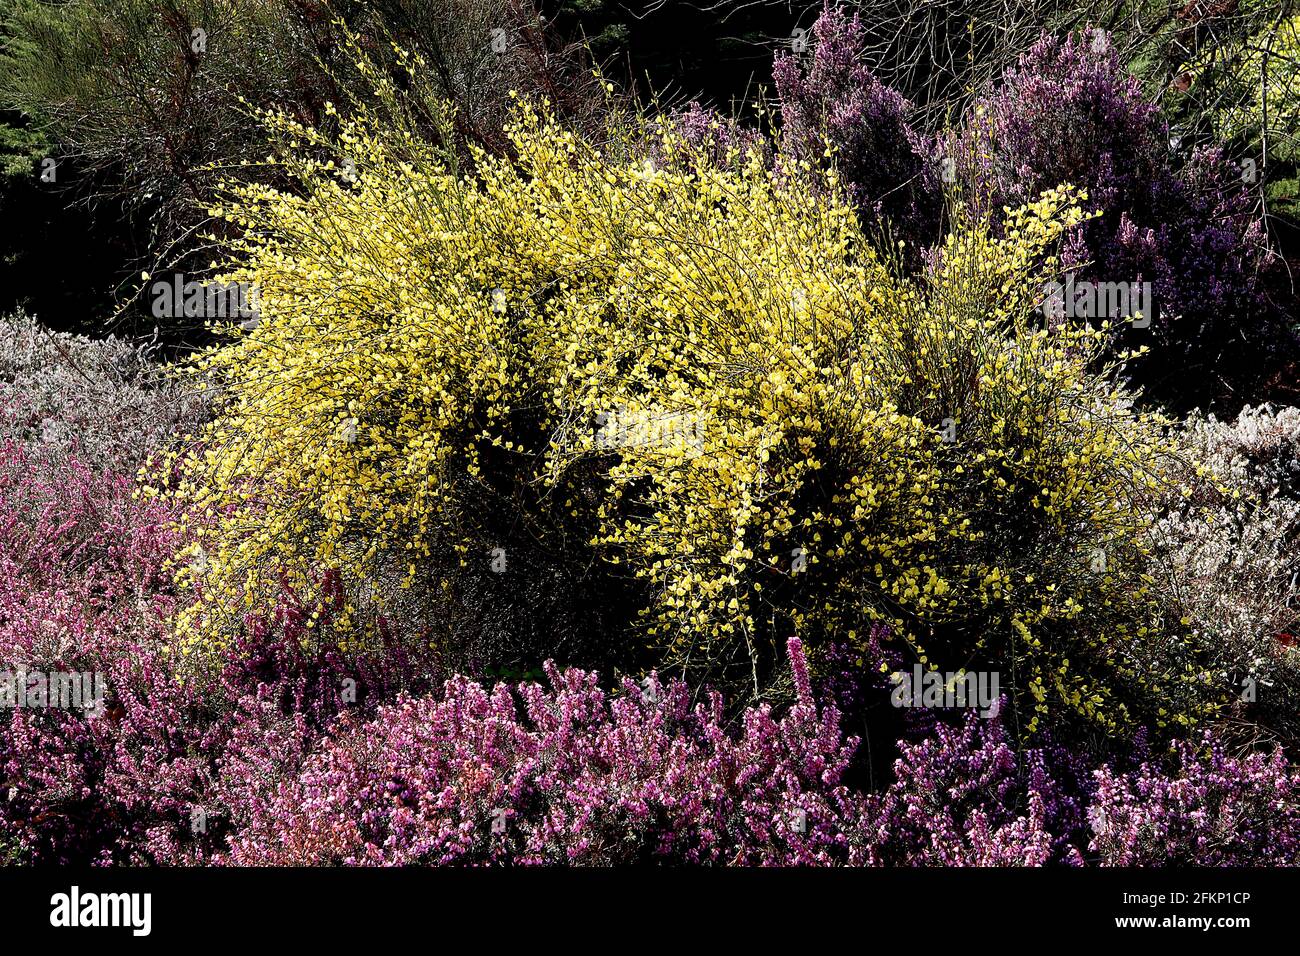 Cytisus praecox / broom ‘Allgold’  yellow pea-like flowers Erica vagans ‘Pyrenees Pink’  tiny urn-shaped pink flowers,  May, England, UK Stock Photo